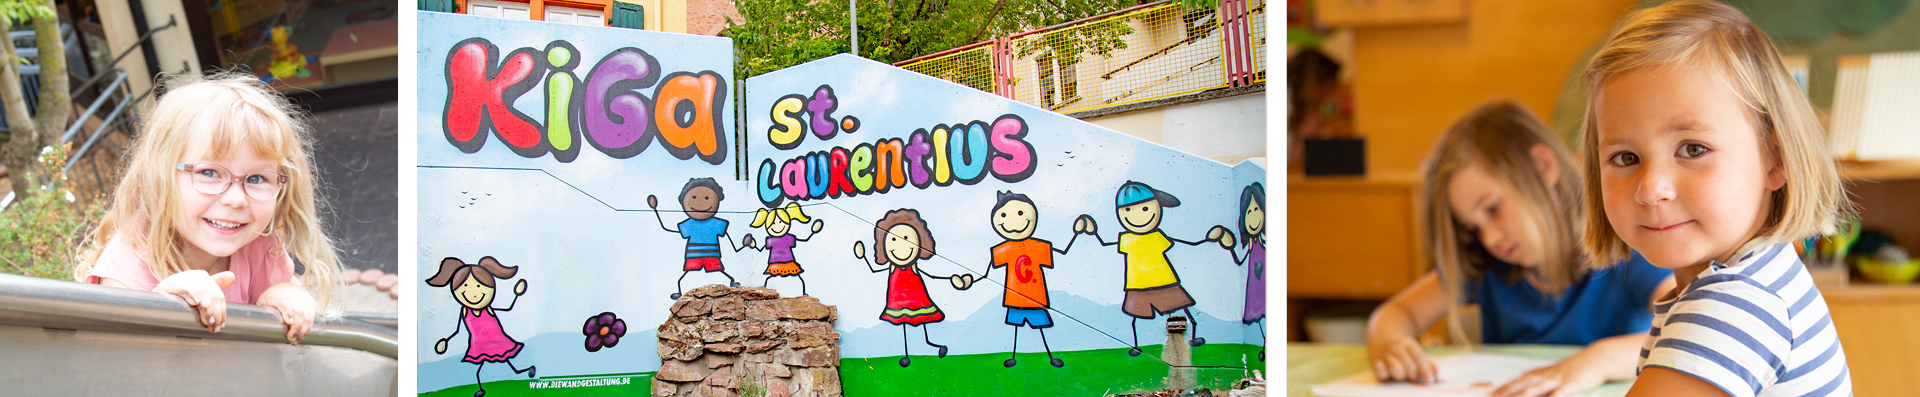 Kindergarten St. Laurentius Logo